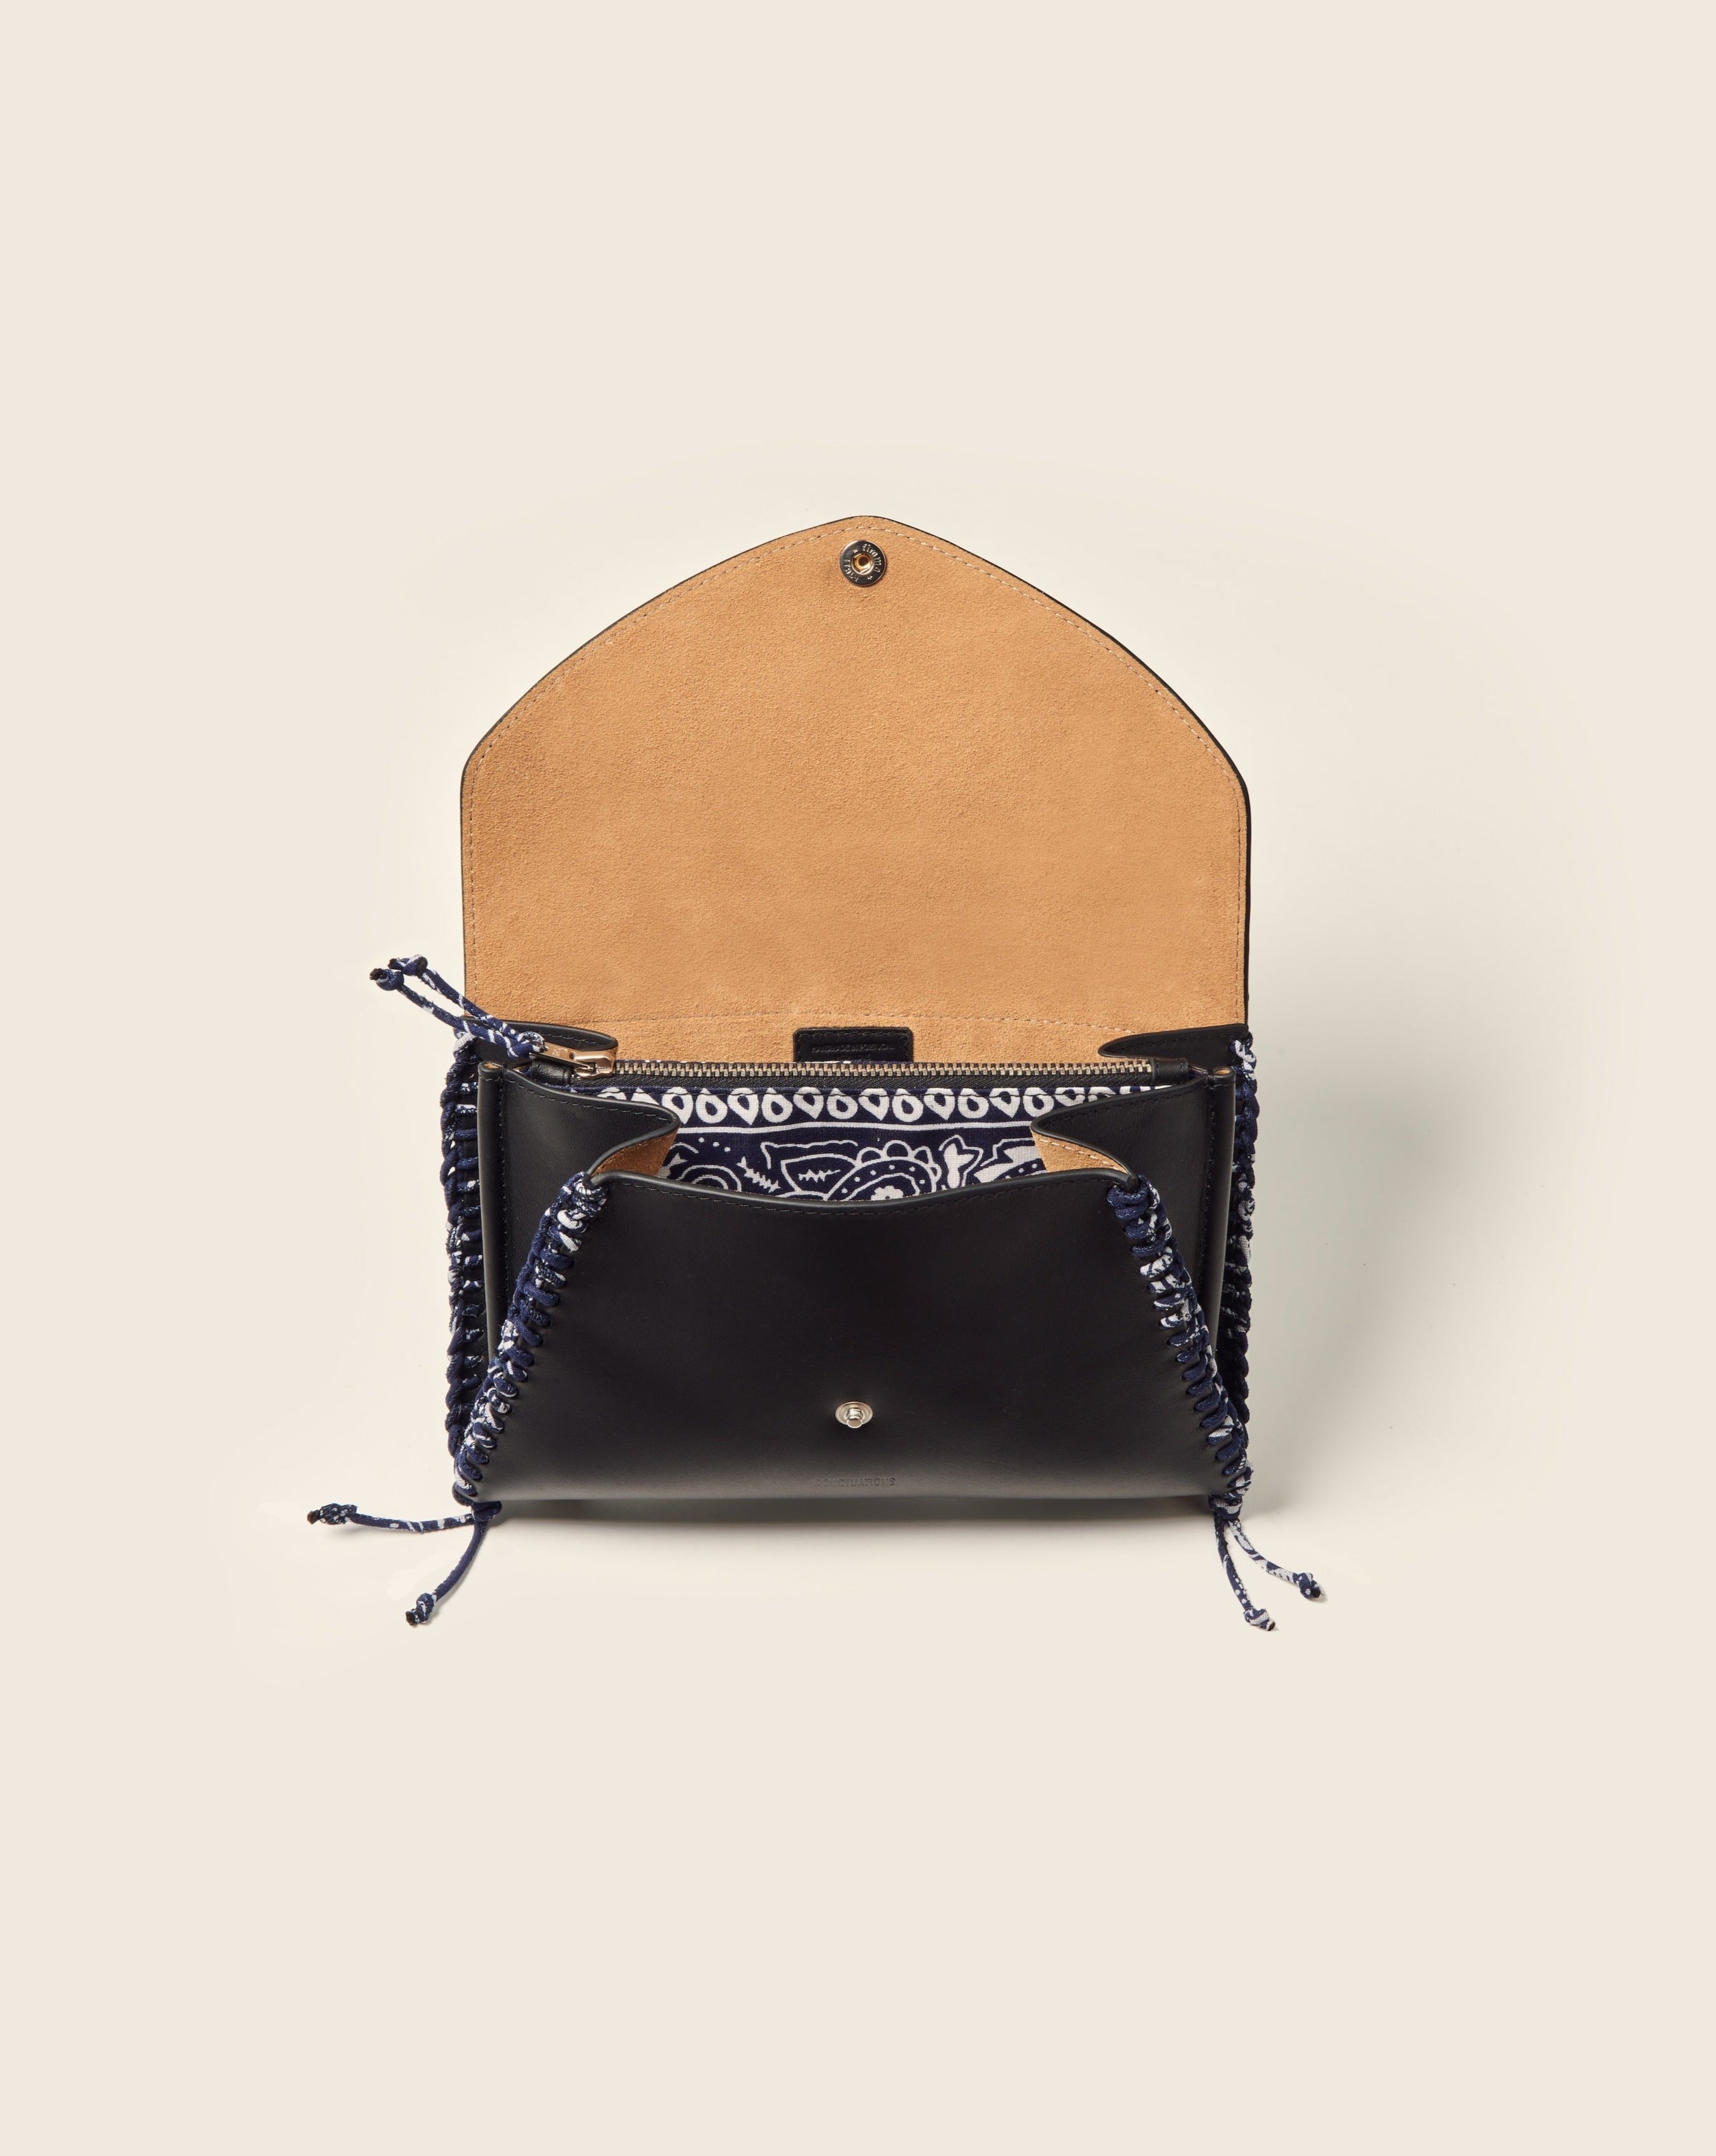 BATU - Envelope bag - Black leather & Bandana navy